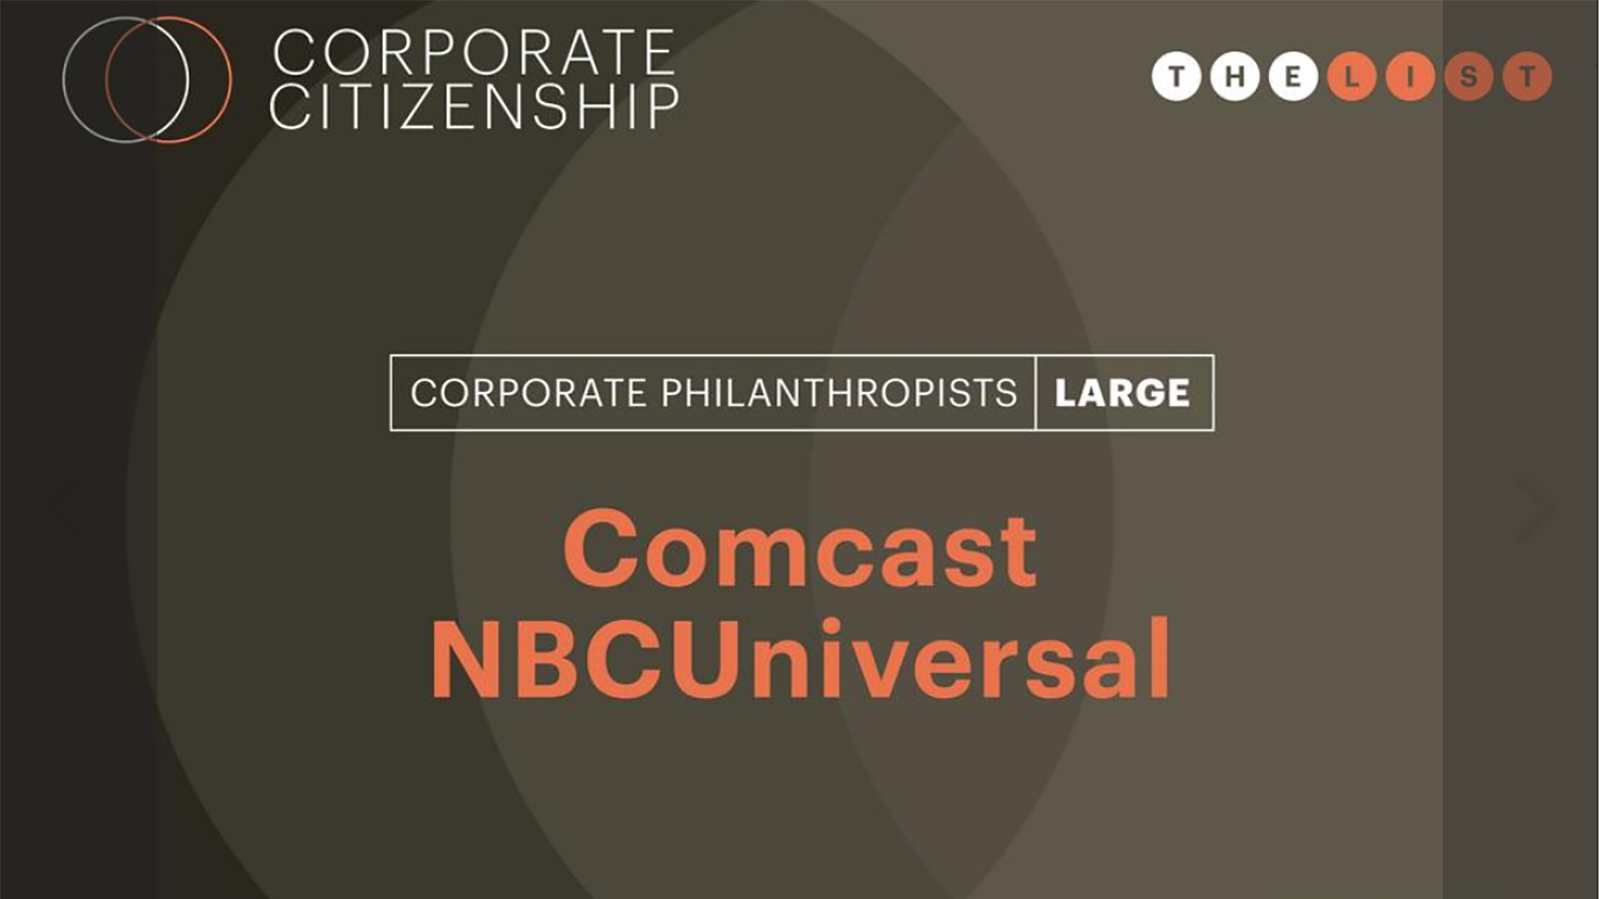 Corporate Philanthropist award announcement for Comcast NBCUniversal